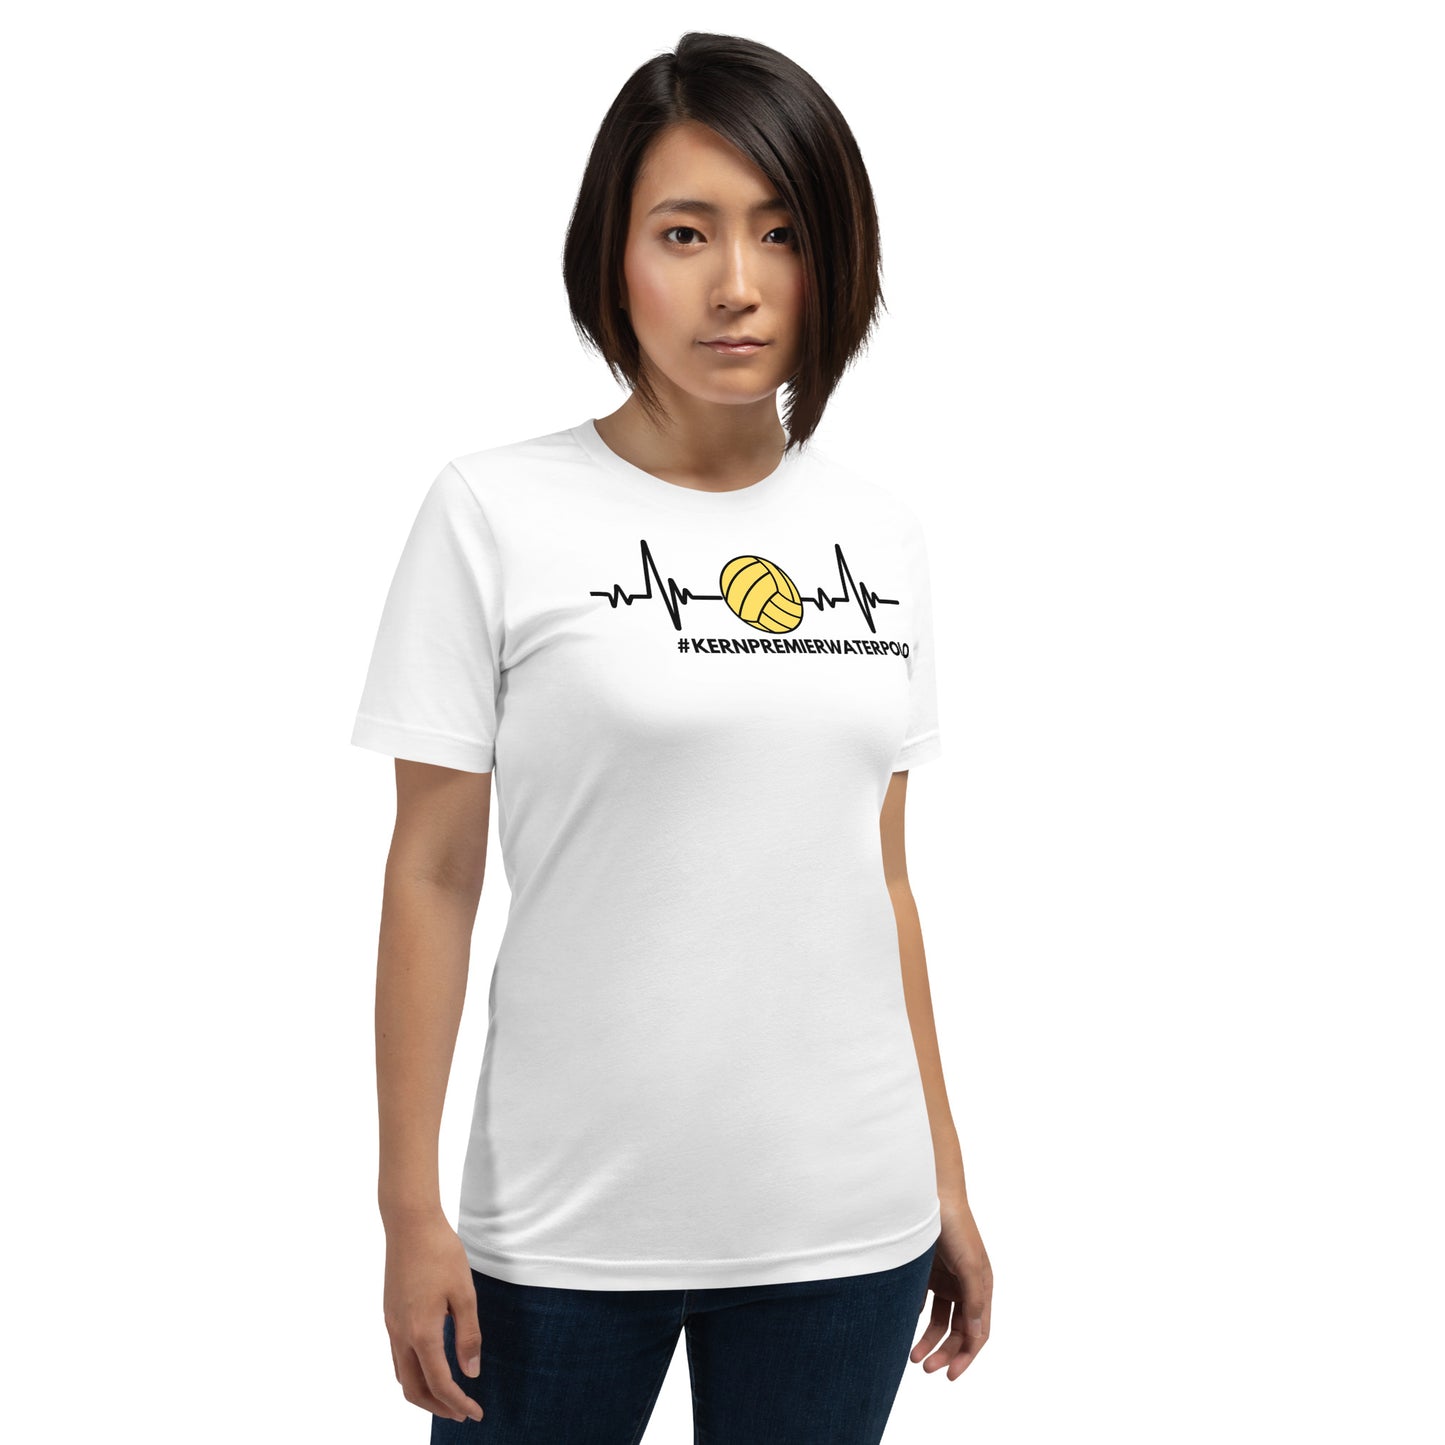 Kern Premier Heartbeat - Unisex Soft T-shirt - Bella Canvas 3001